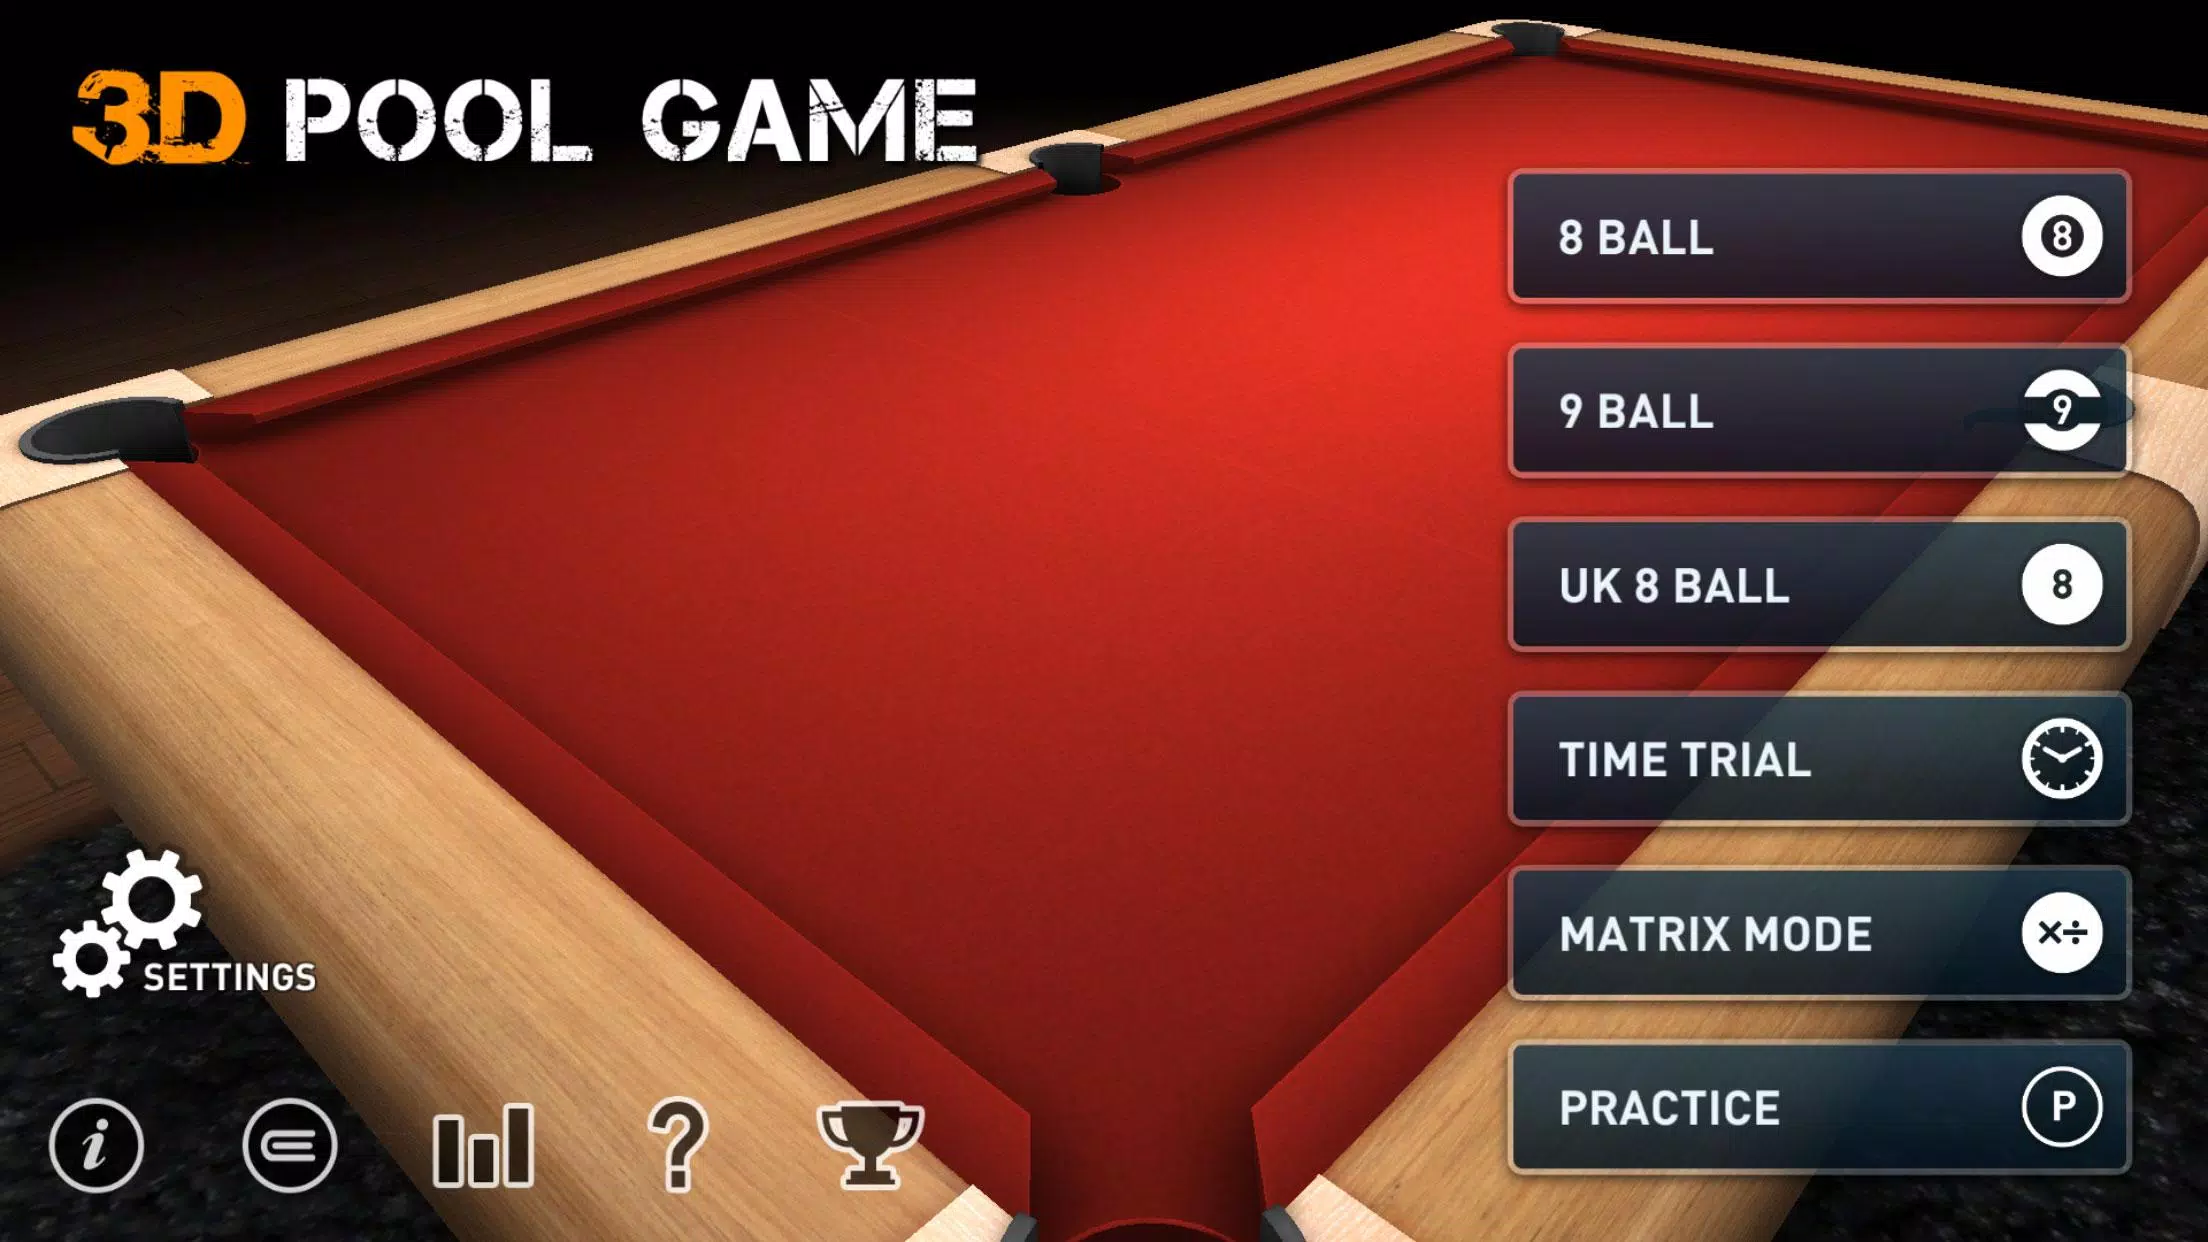 Download do APK de 3D Pool Game para Android